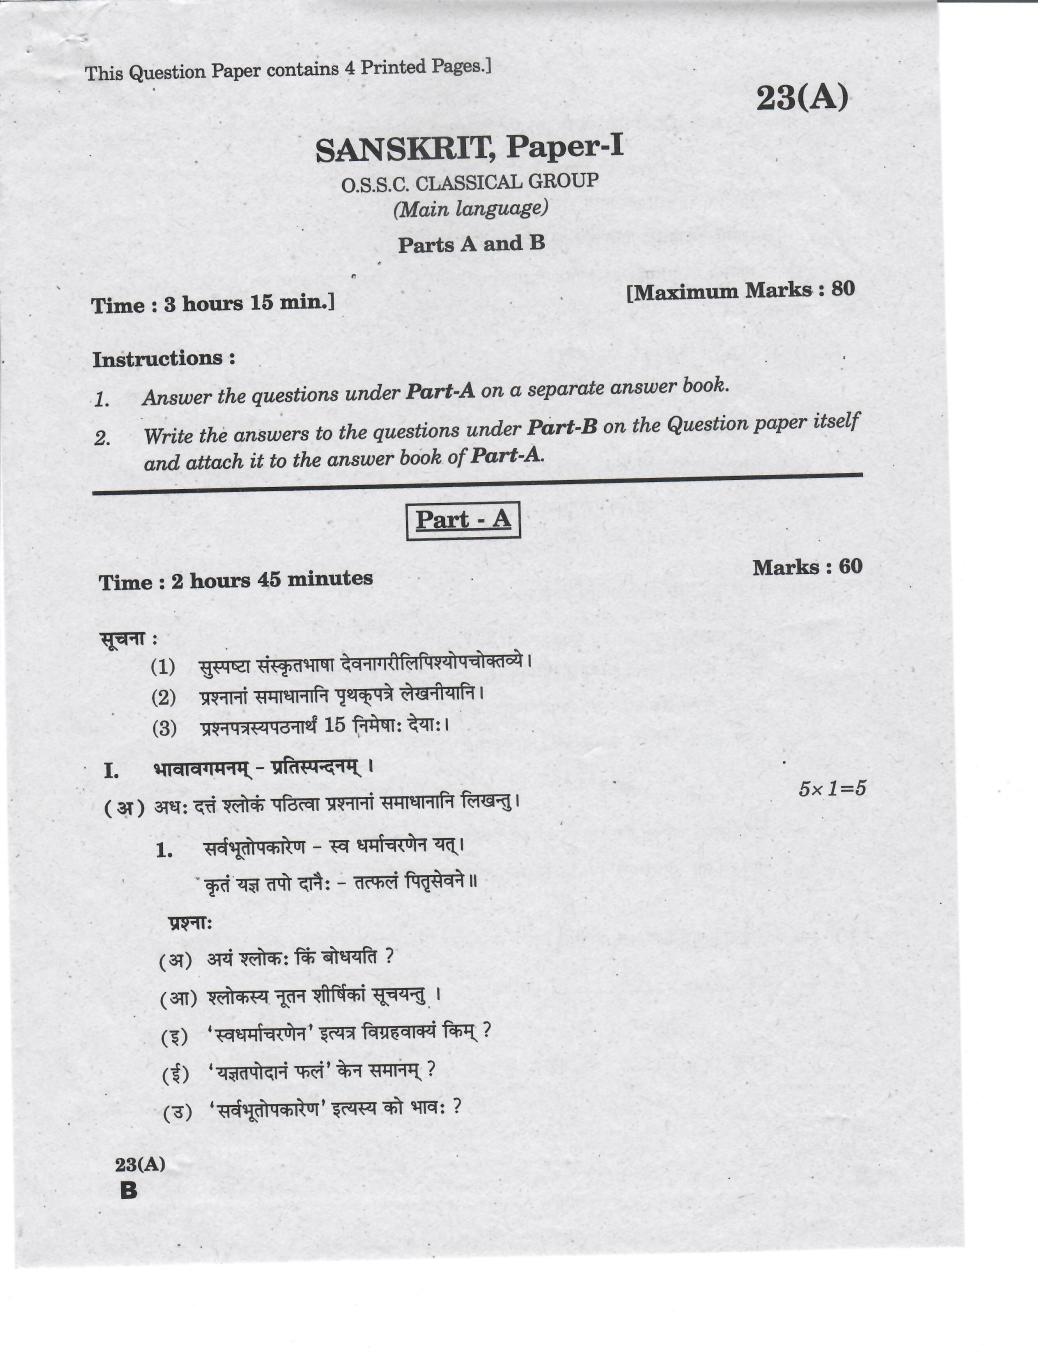 AP 10th Class Question Paper 2019 Sanskrit - Paper 1 (OSSC Classical Group) - Page 1